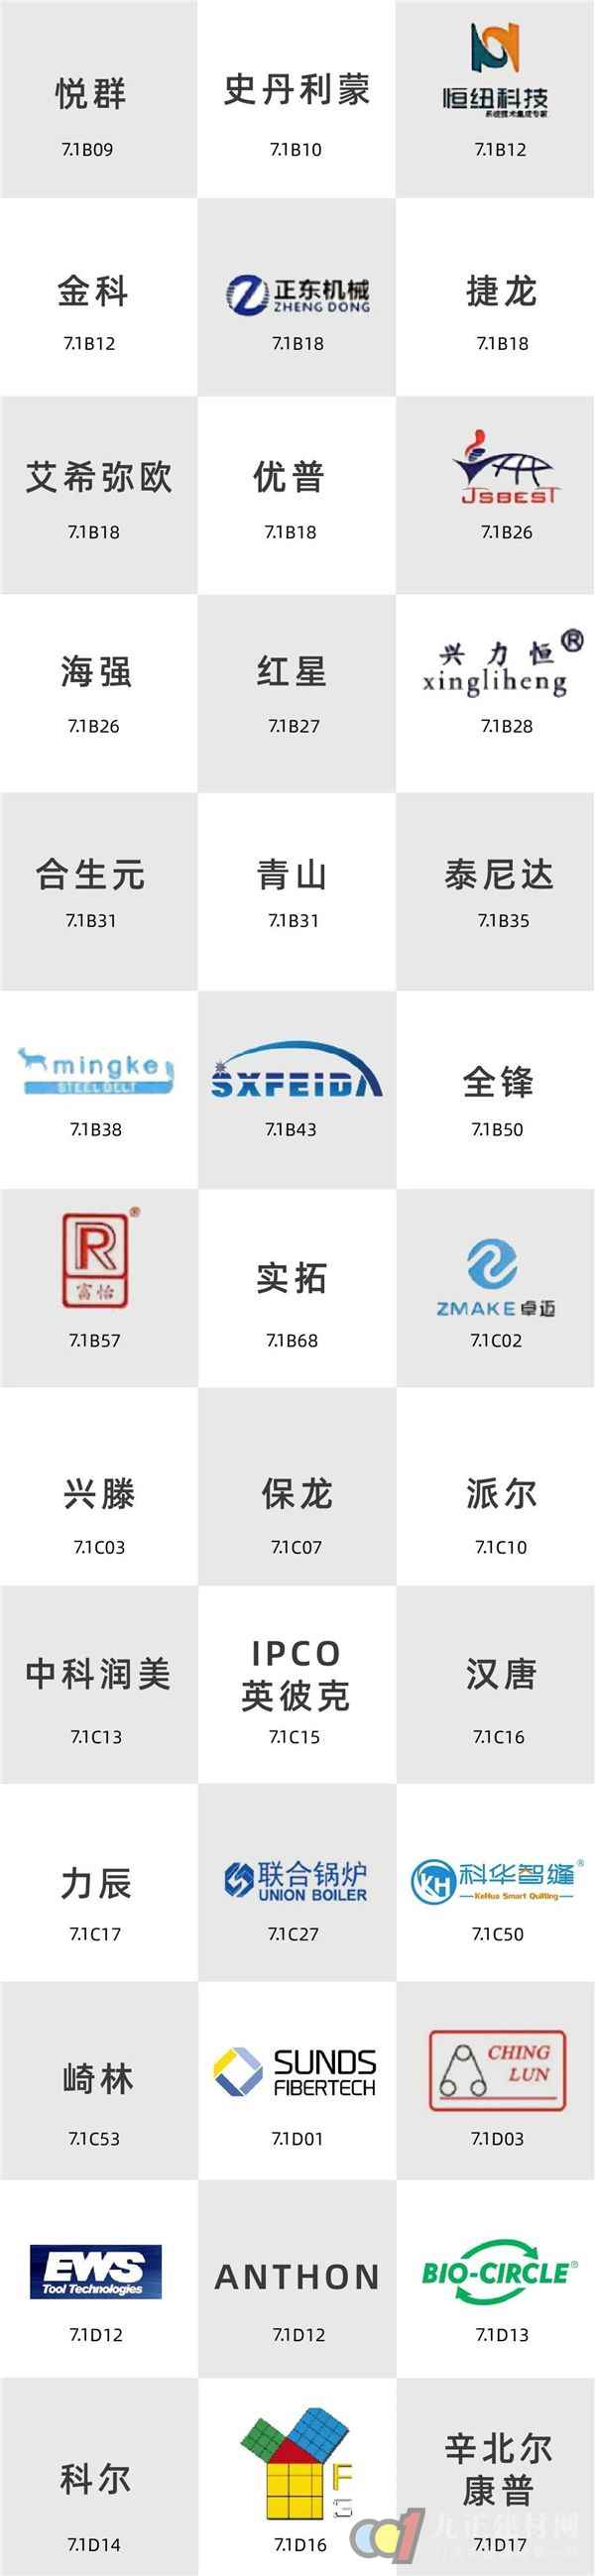  CIFF 上海虹桥 | 2020家居设计新意集之「精进的设备」